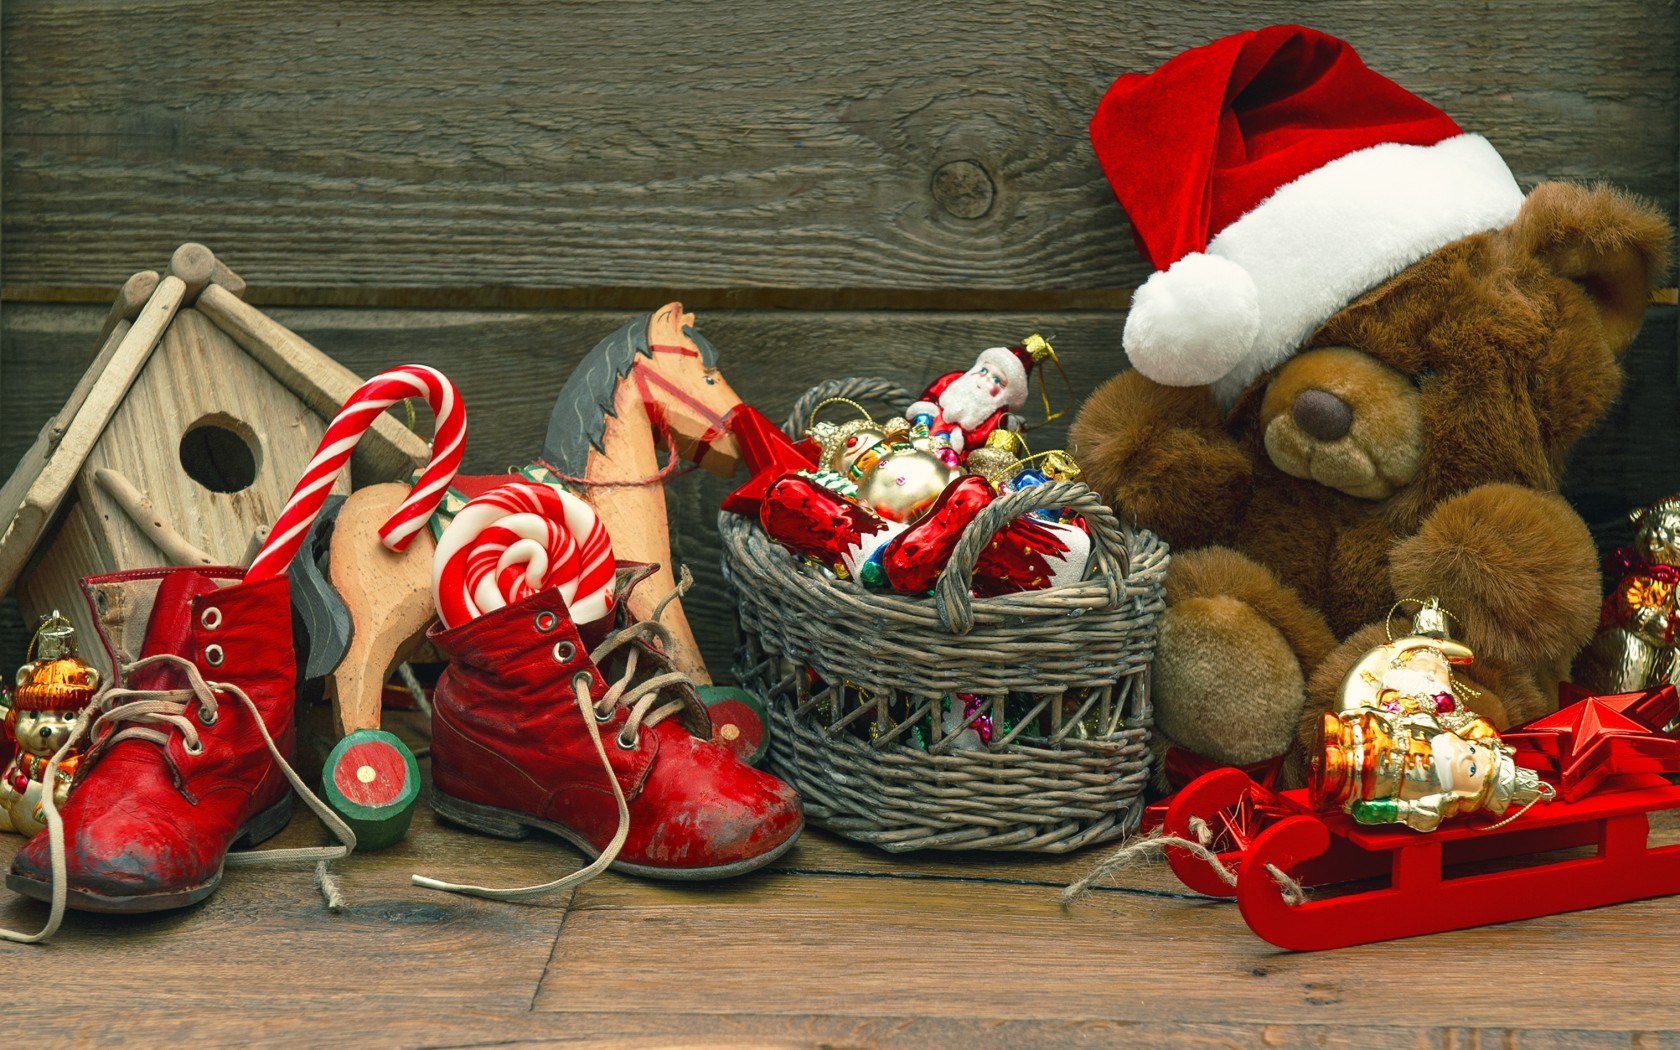 christmas-toys-ornaments-teddy-bear-hat-basket-candy-gift-fullscreen-